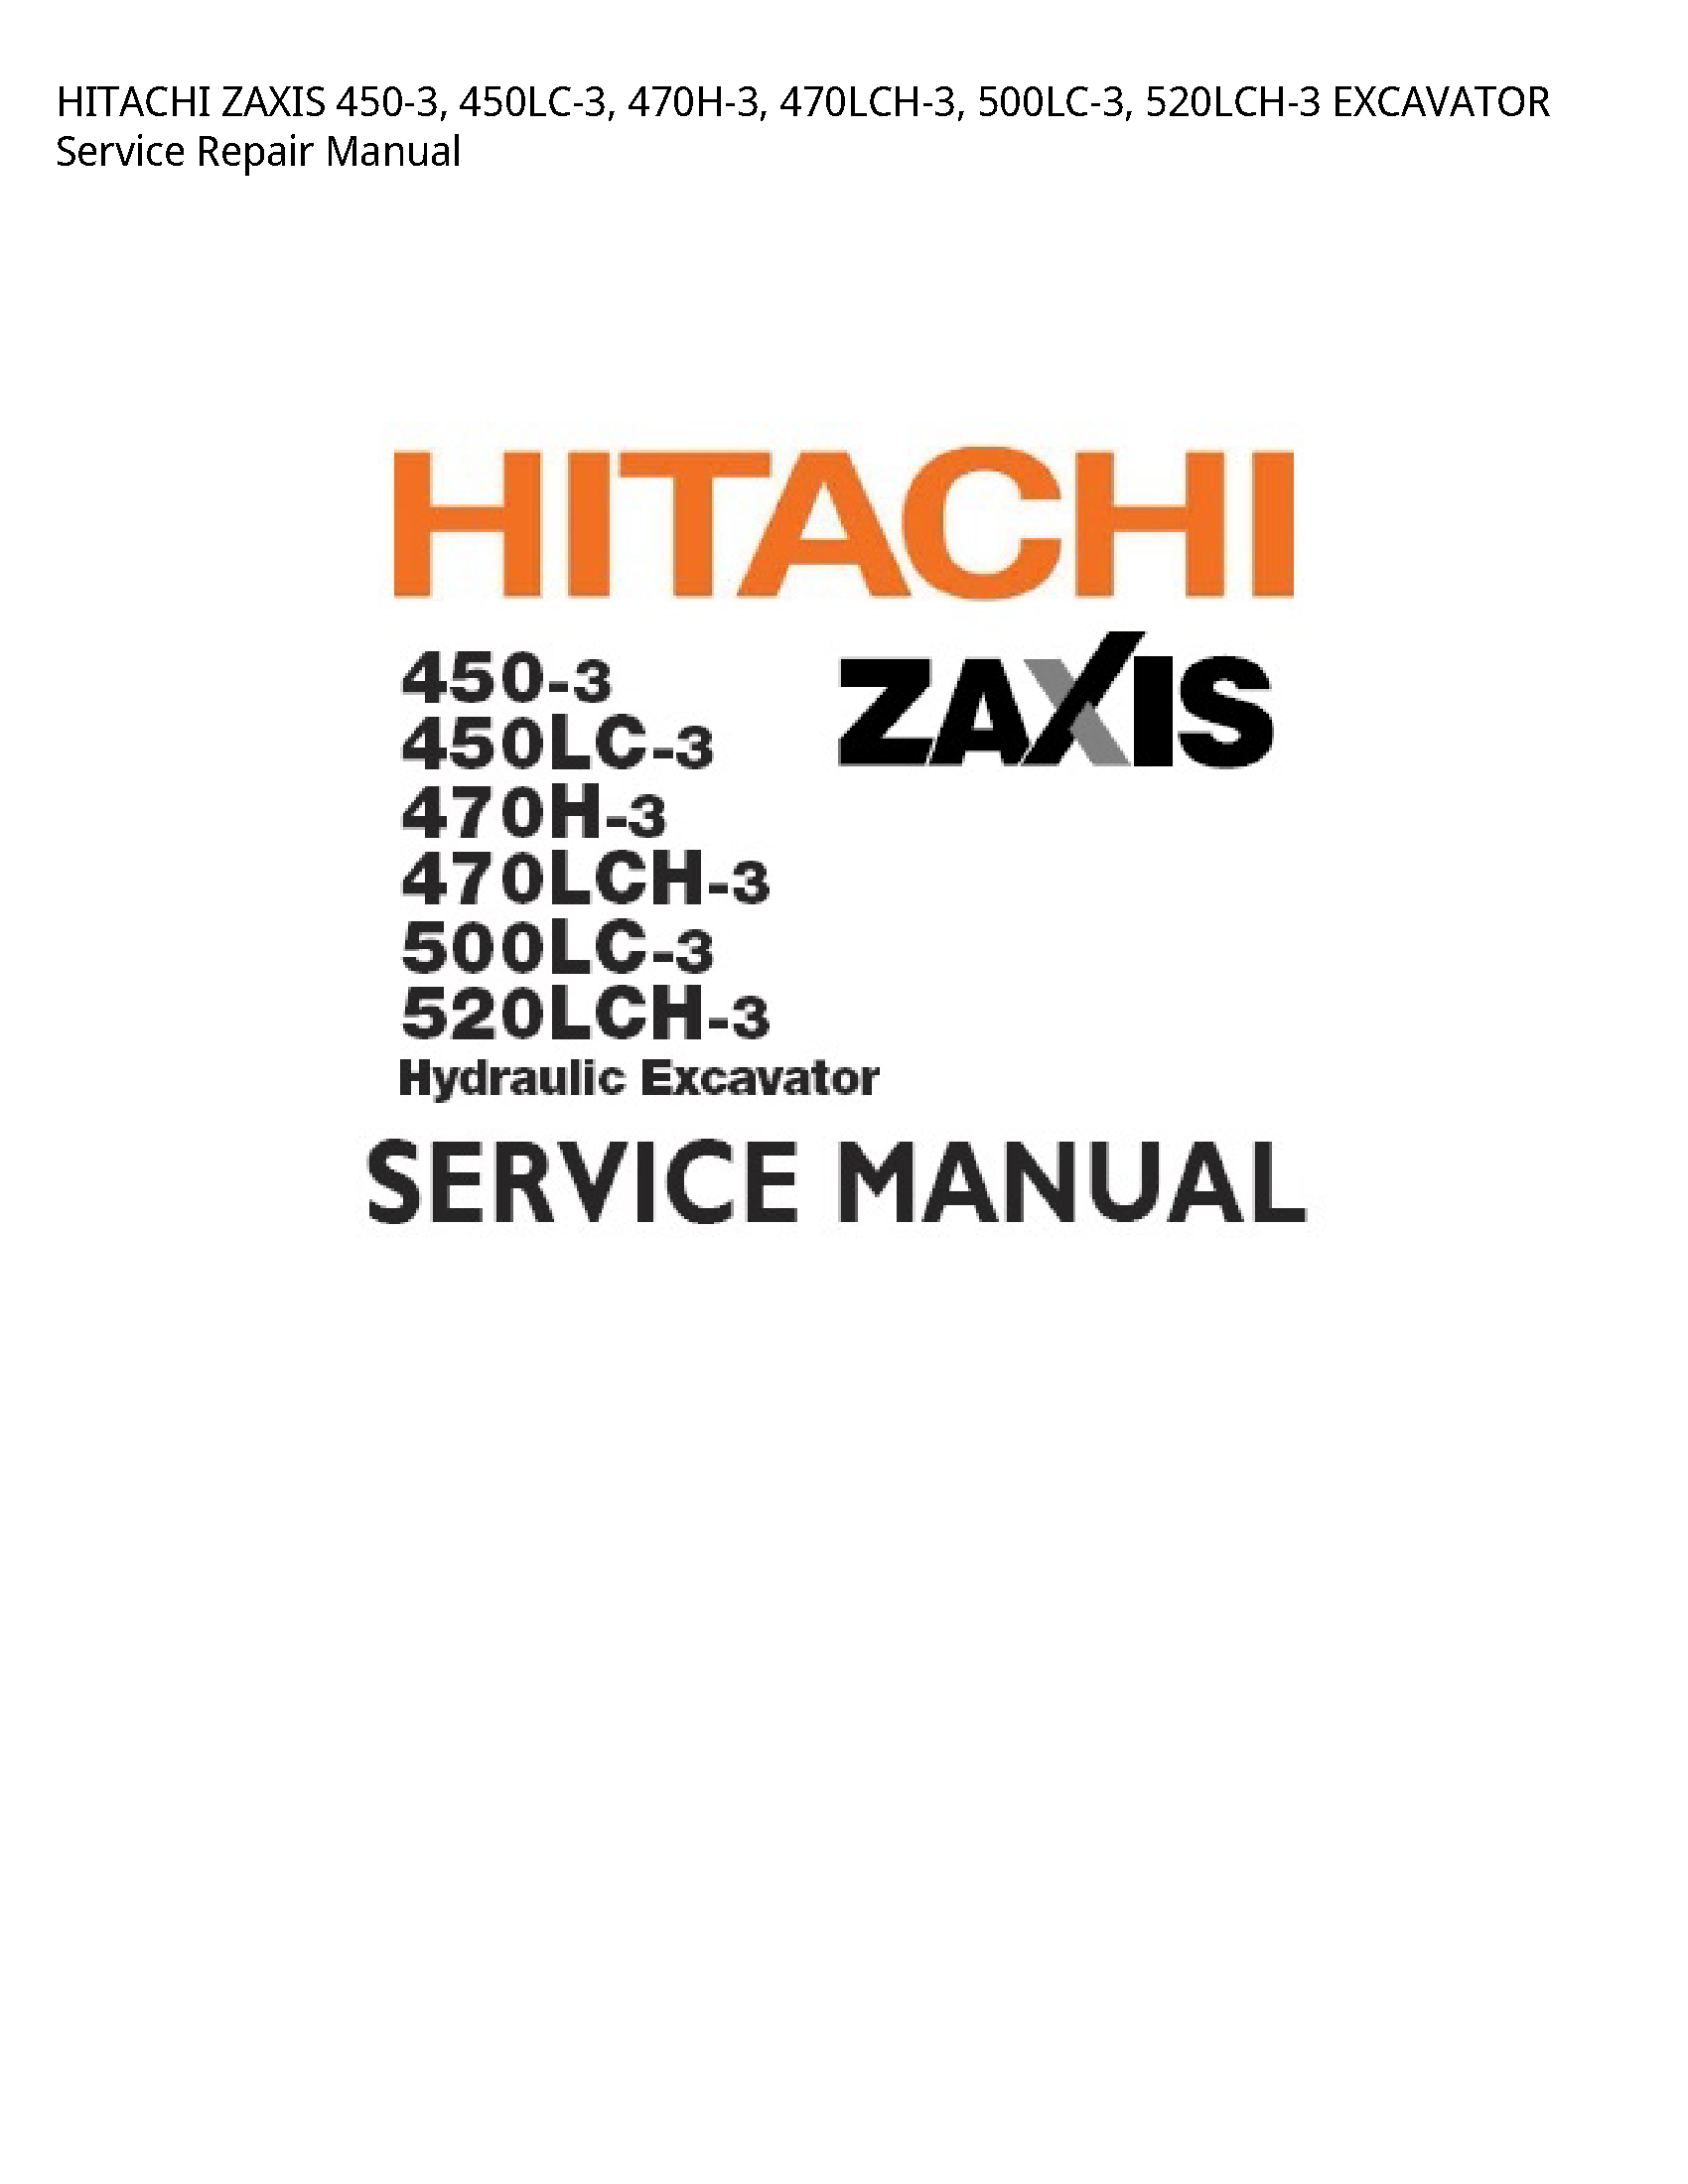 Hitachi 450-3 ZAXIS EXCAVATOR manual